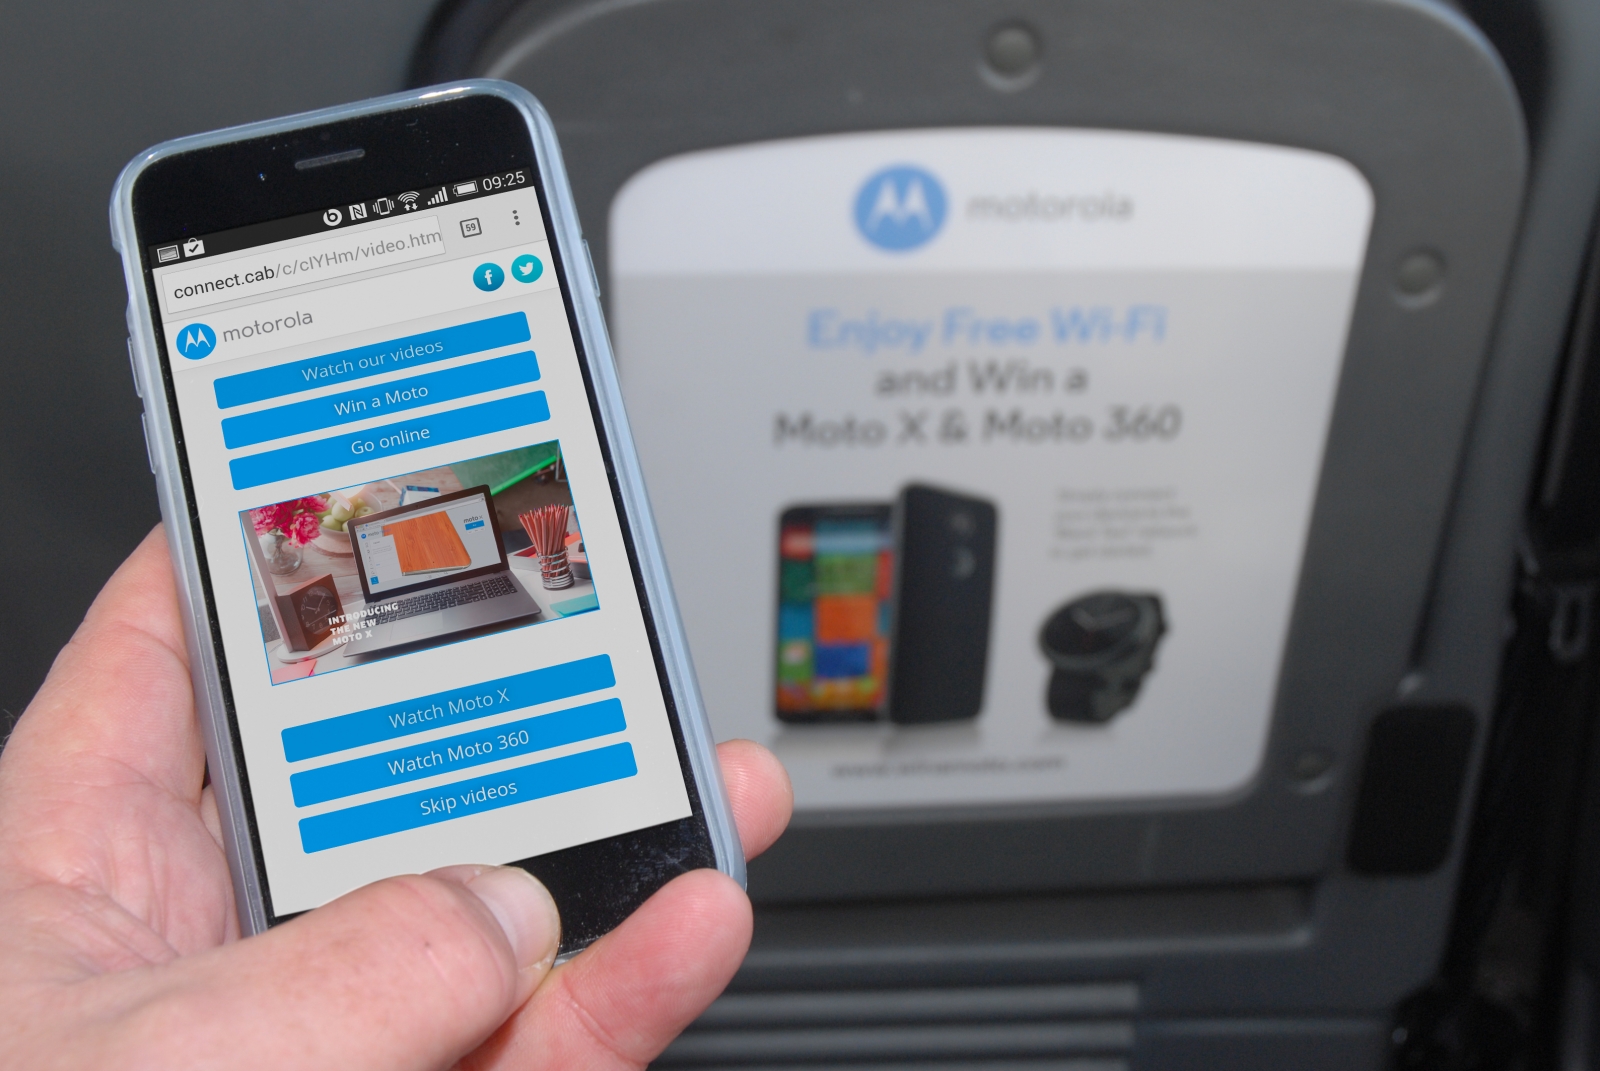 2014 Ubiquitous campaign for Motorola - Design and Win a Moto X & Moto 360